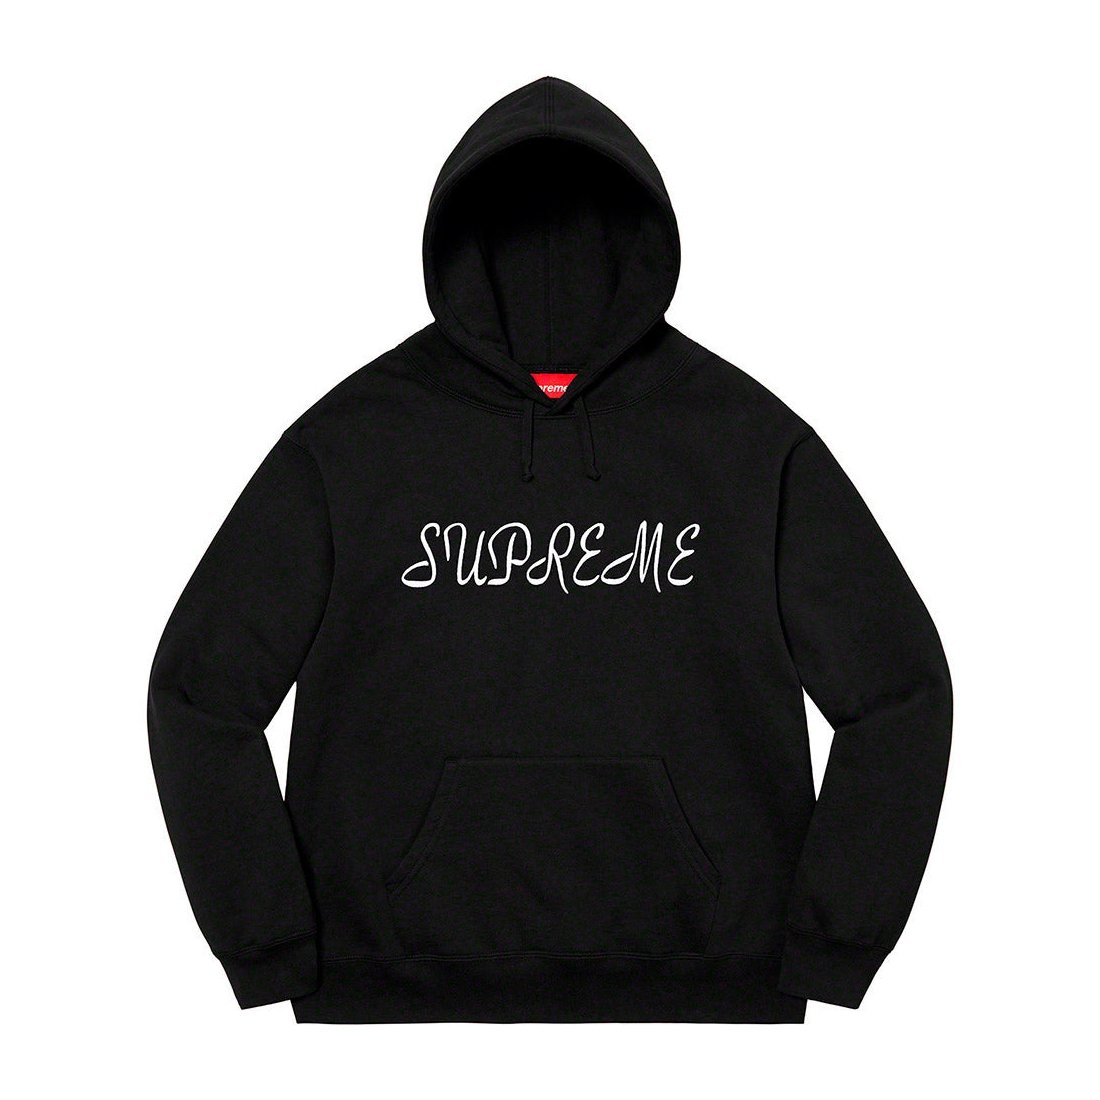 Details on Script Hooded Sweatshirt Black from spring summer 2023 (Price is $158)